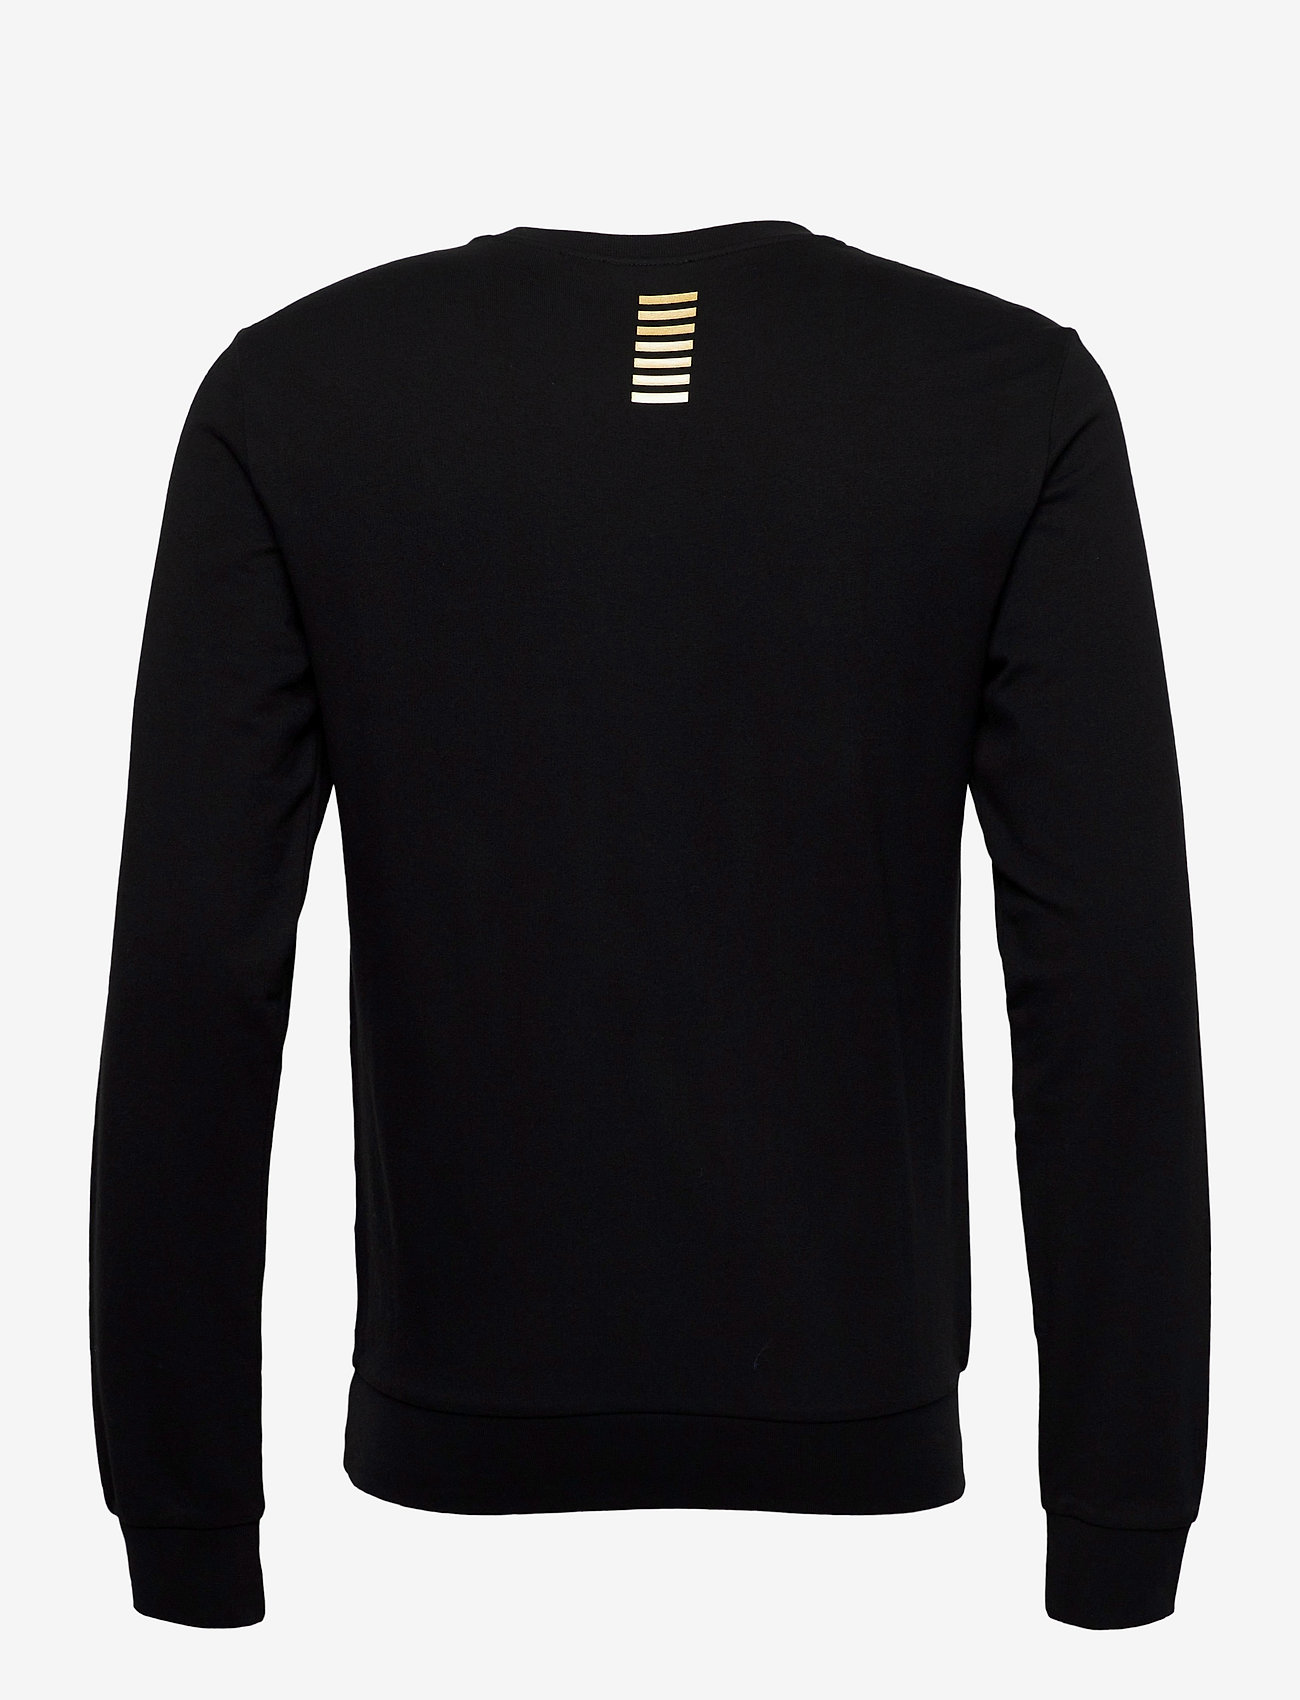 EA7 - SWEATSHIRT - sweatshirts - black - 1